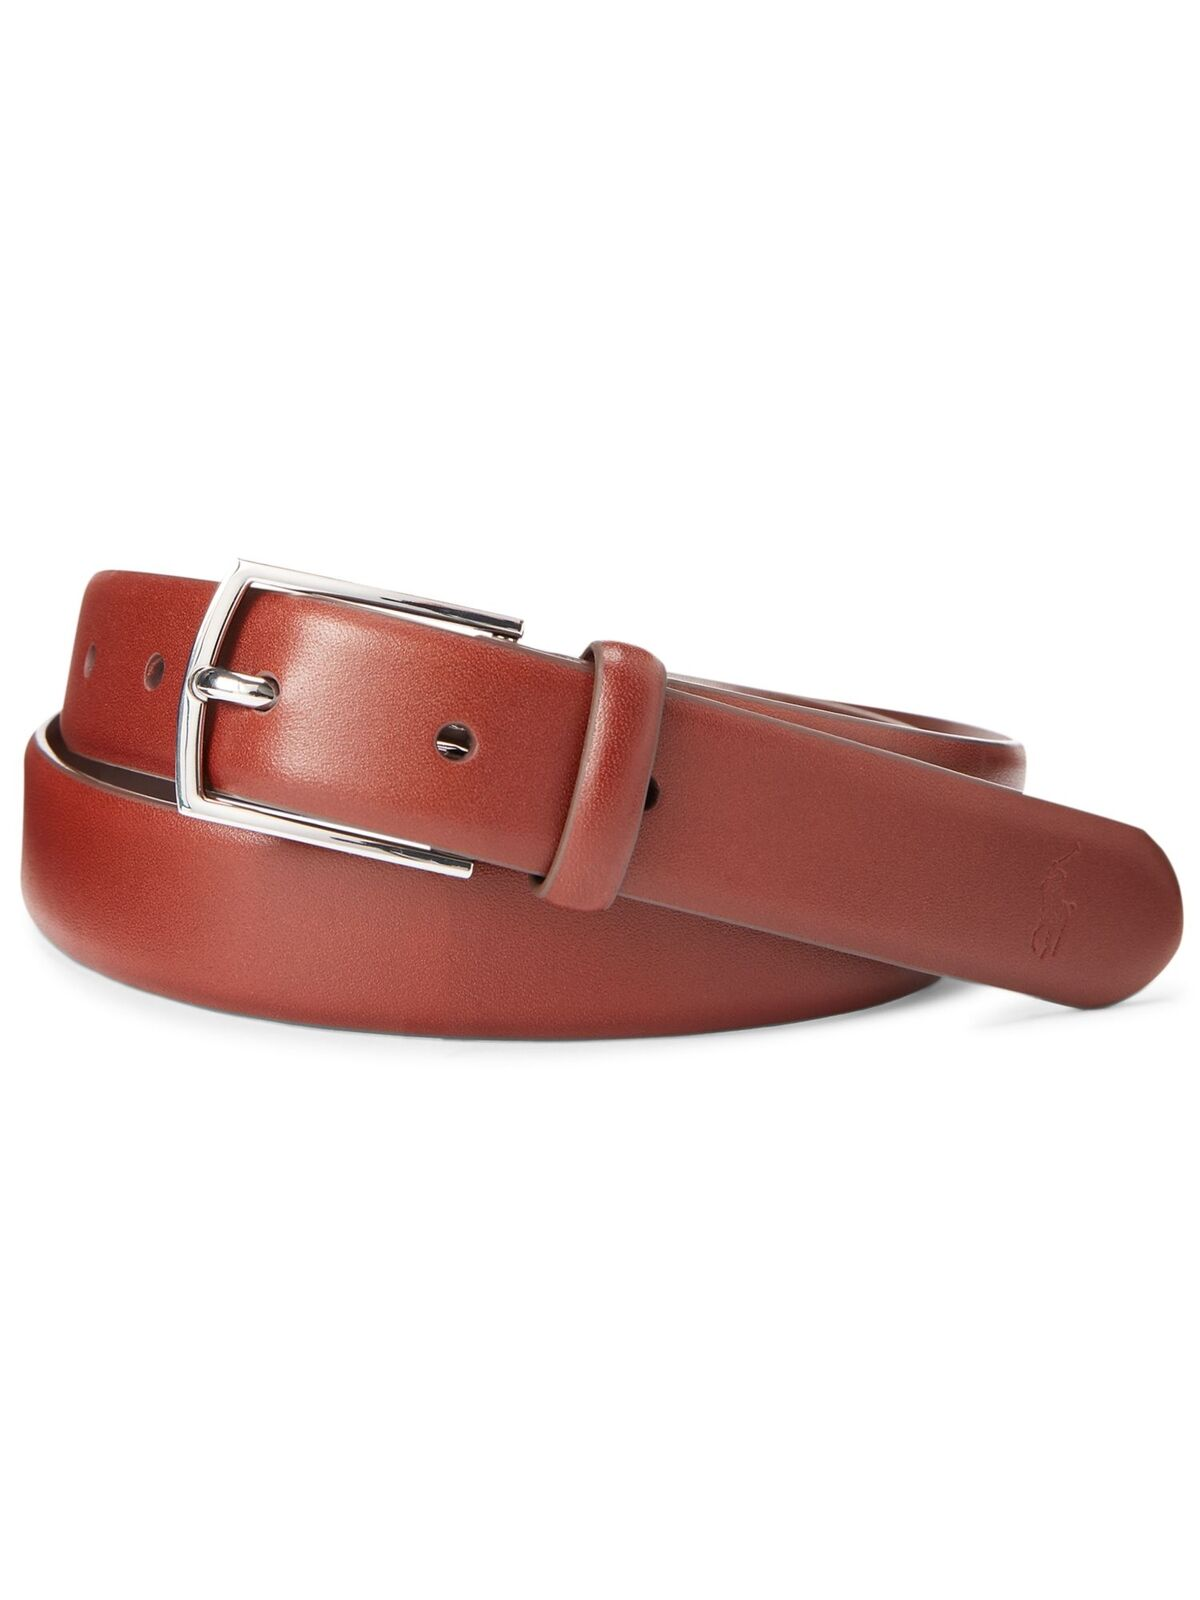 POLO RALPH LAUREN Men's Brown Adjustable Faux Leather Casual Belt